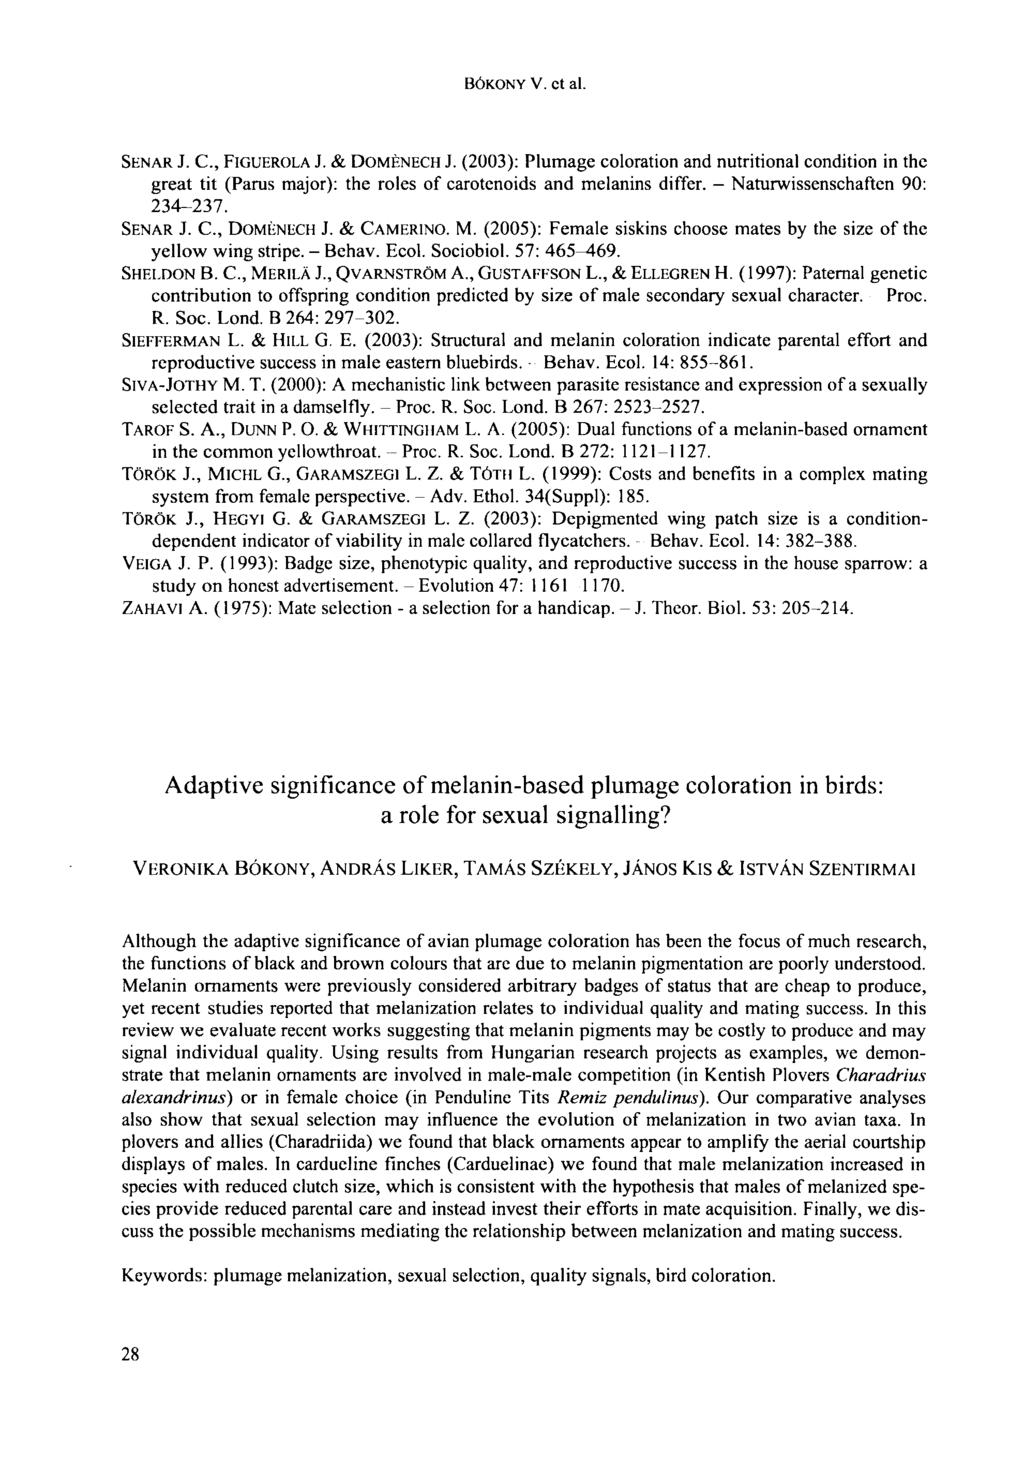 BÓKONY V. et al. SENAR J. С., FIGUEROLA J. & DOMENECH J. (2003): Plumage coloration and nutritional condition in the great tit (Parus major): the roles of carotenoids and melanins differ.